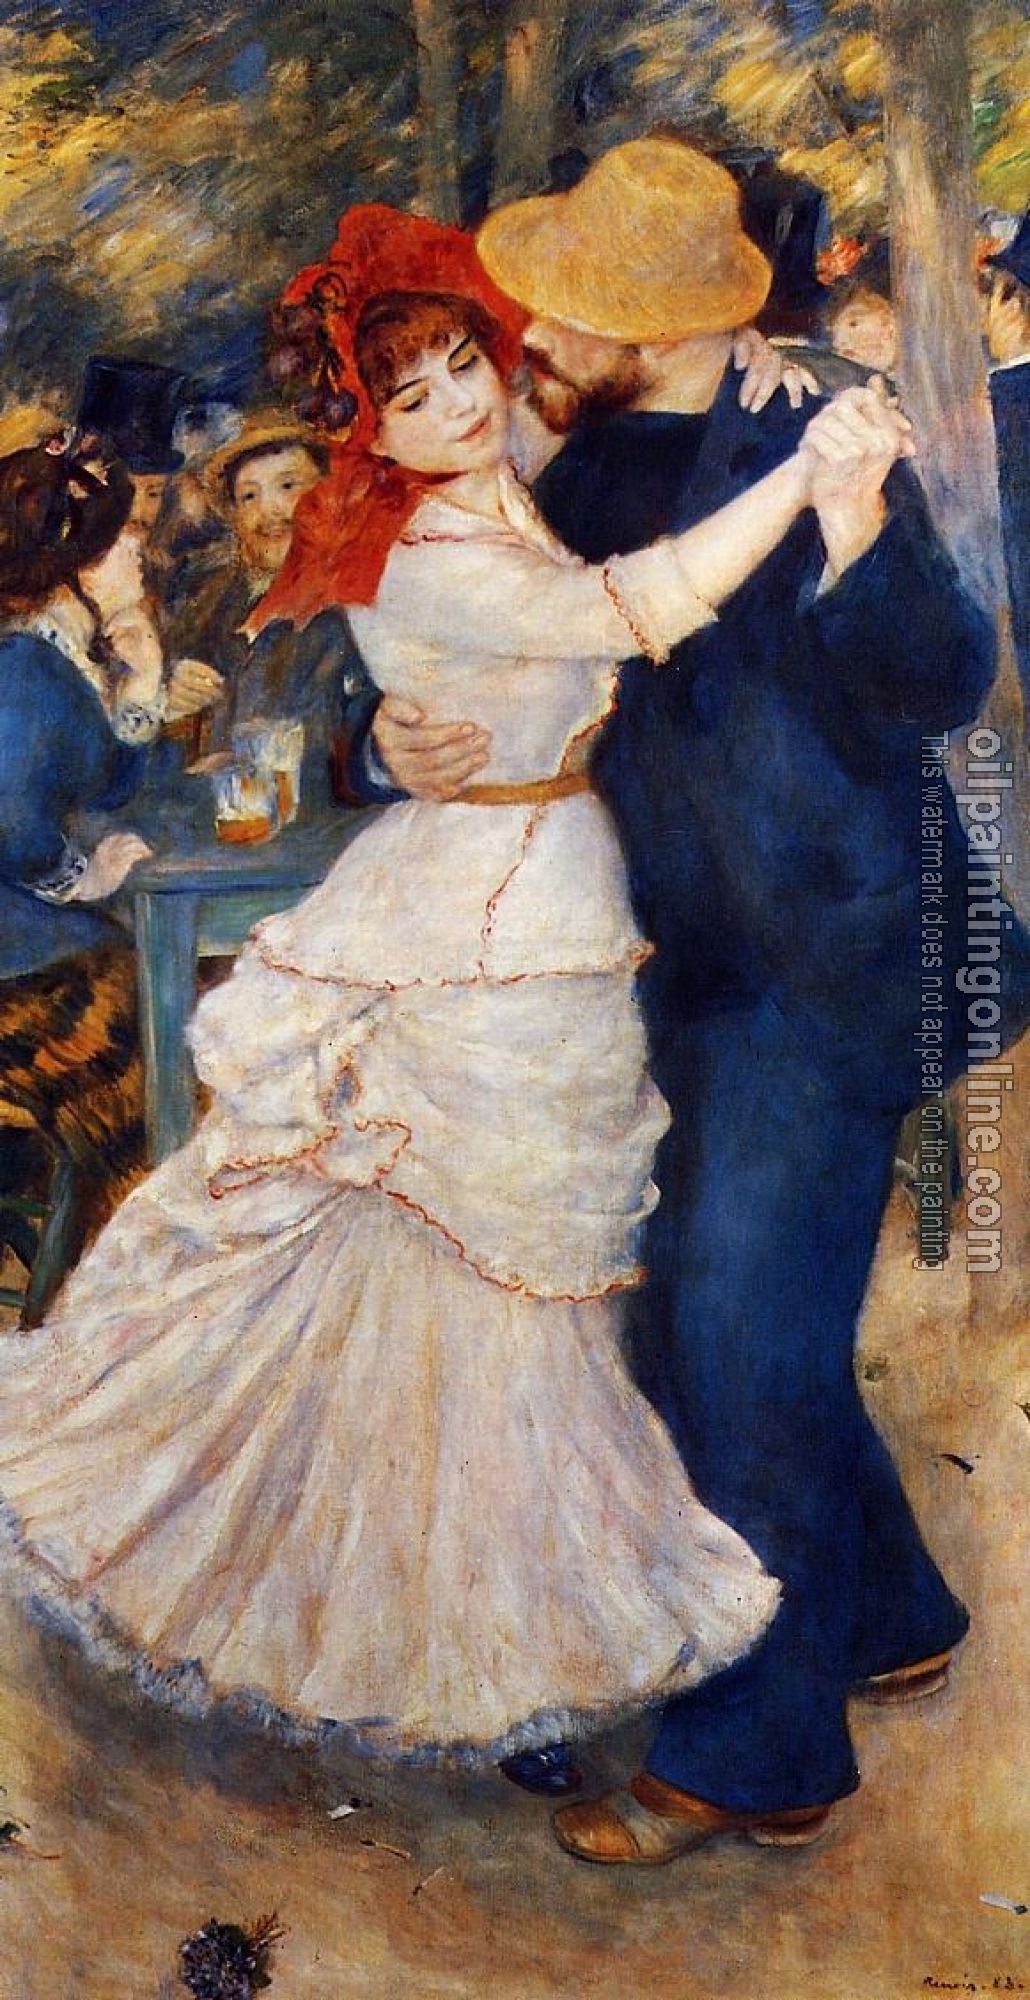 Renoir, Pierre Auguste - Dance at Bougival